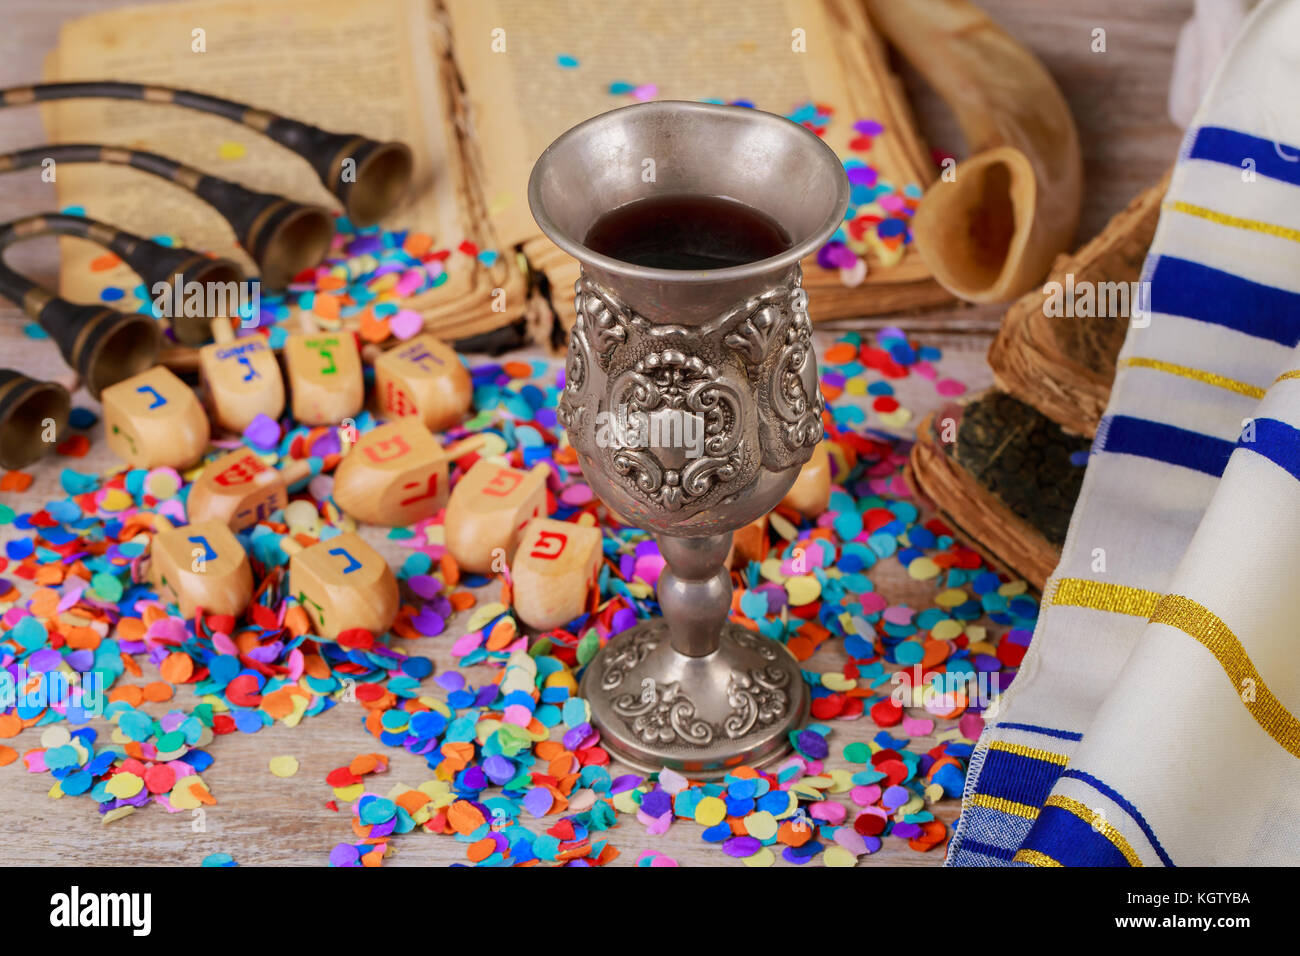 Festa ebraica hanukkah vino hanukkah menorah con di hanukkah dreidels in ambiente rustico chanukah dreidels in legno su di una superficie di legno. Foto Stock